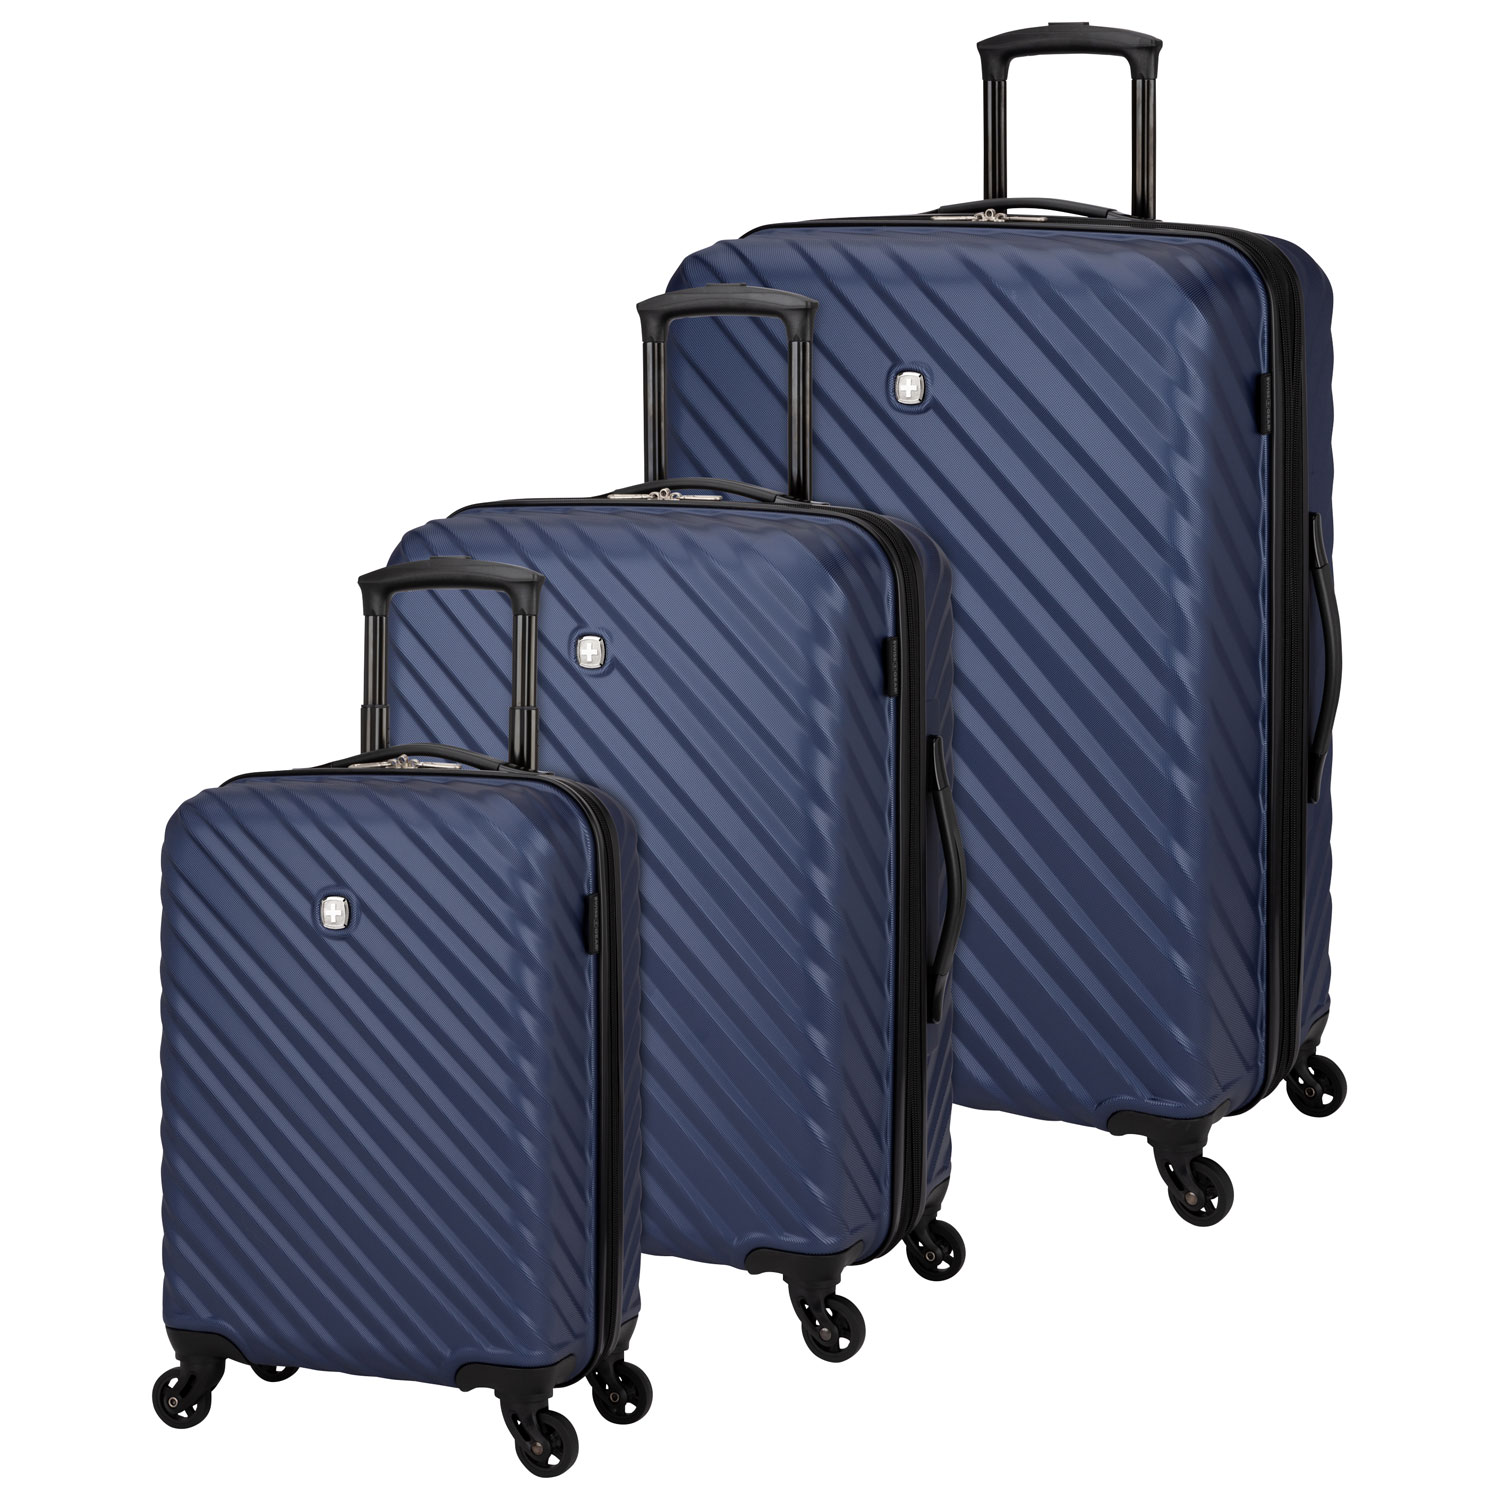 SWISSGEAR Mod 3-Piece Hard Side Expandable Luggage Set - Midnight